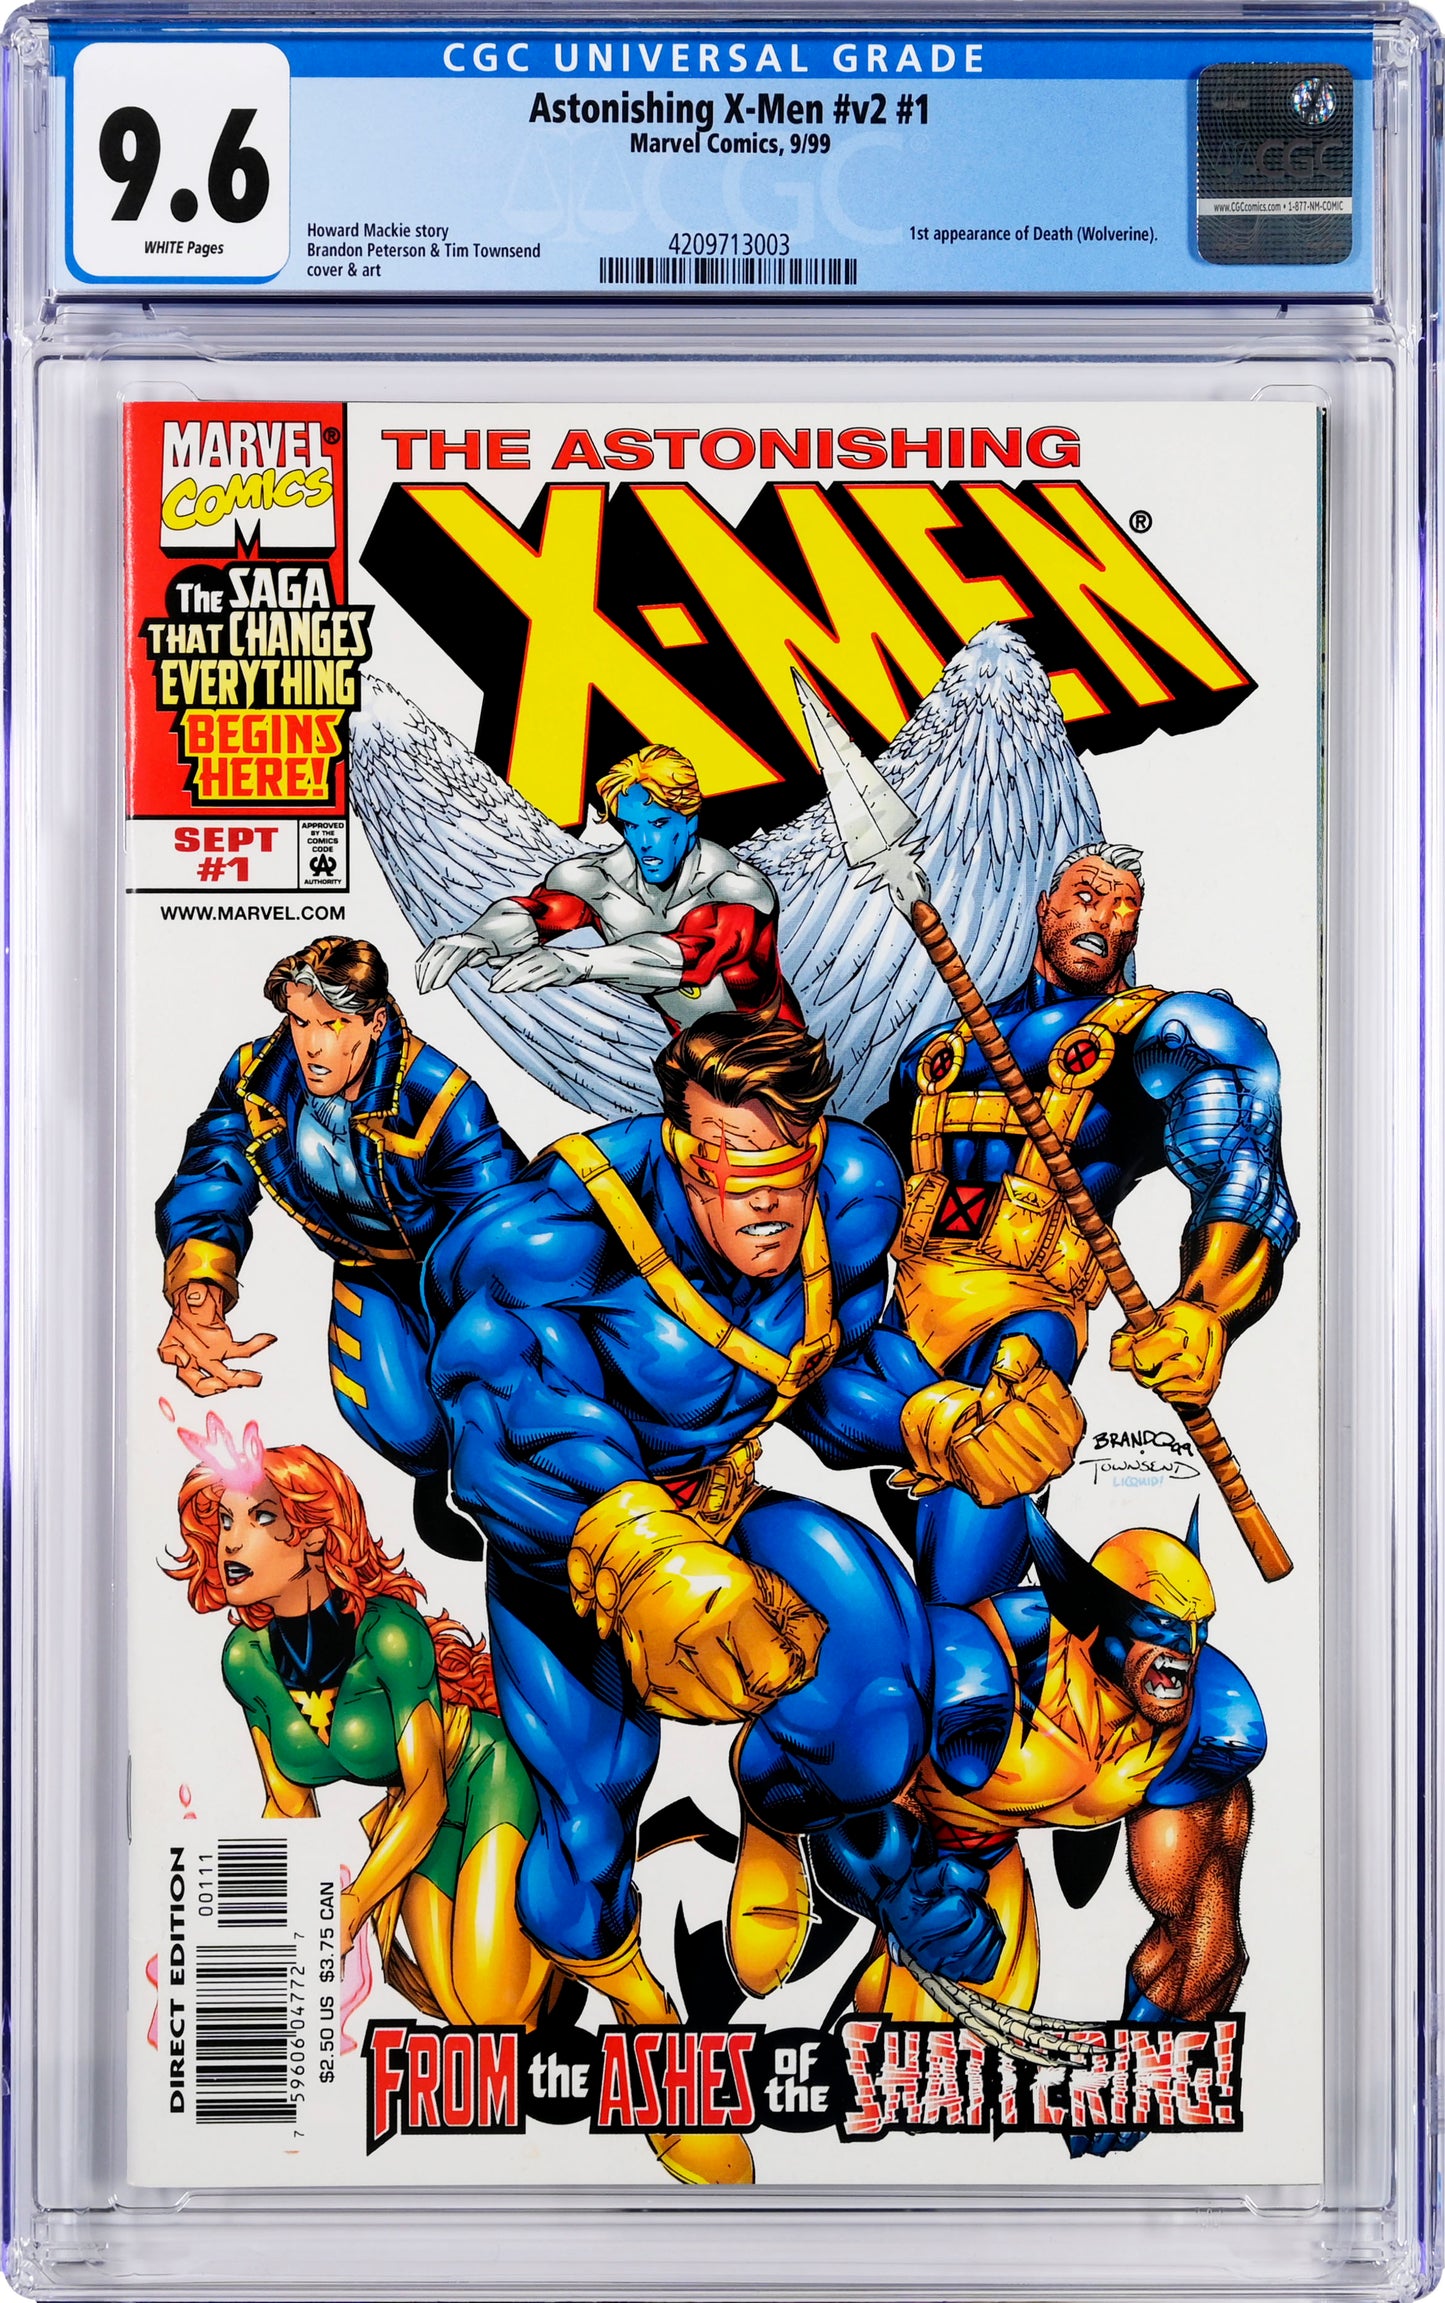 Astonishing X-Men #1 - CGC Graded 9.6 - 1st Appearance Wolverine as Death